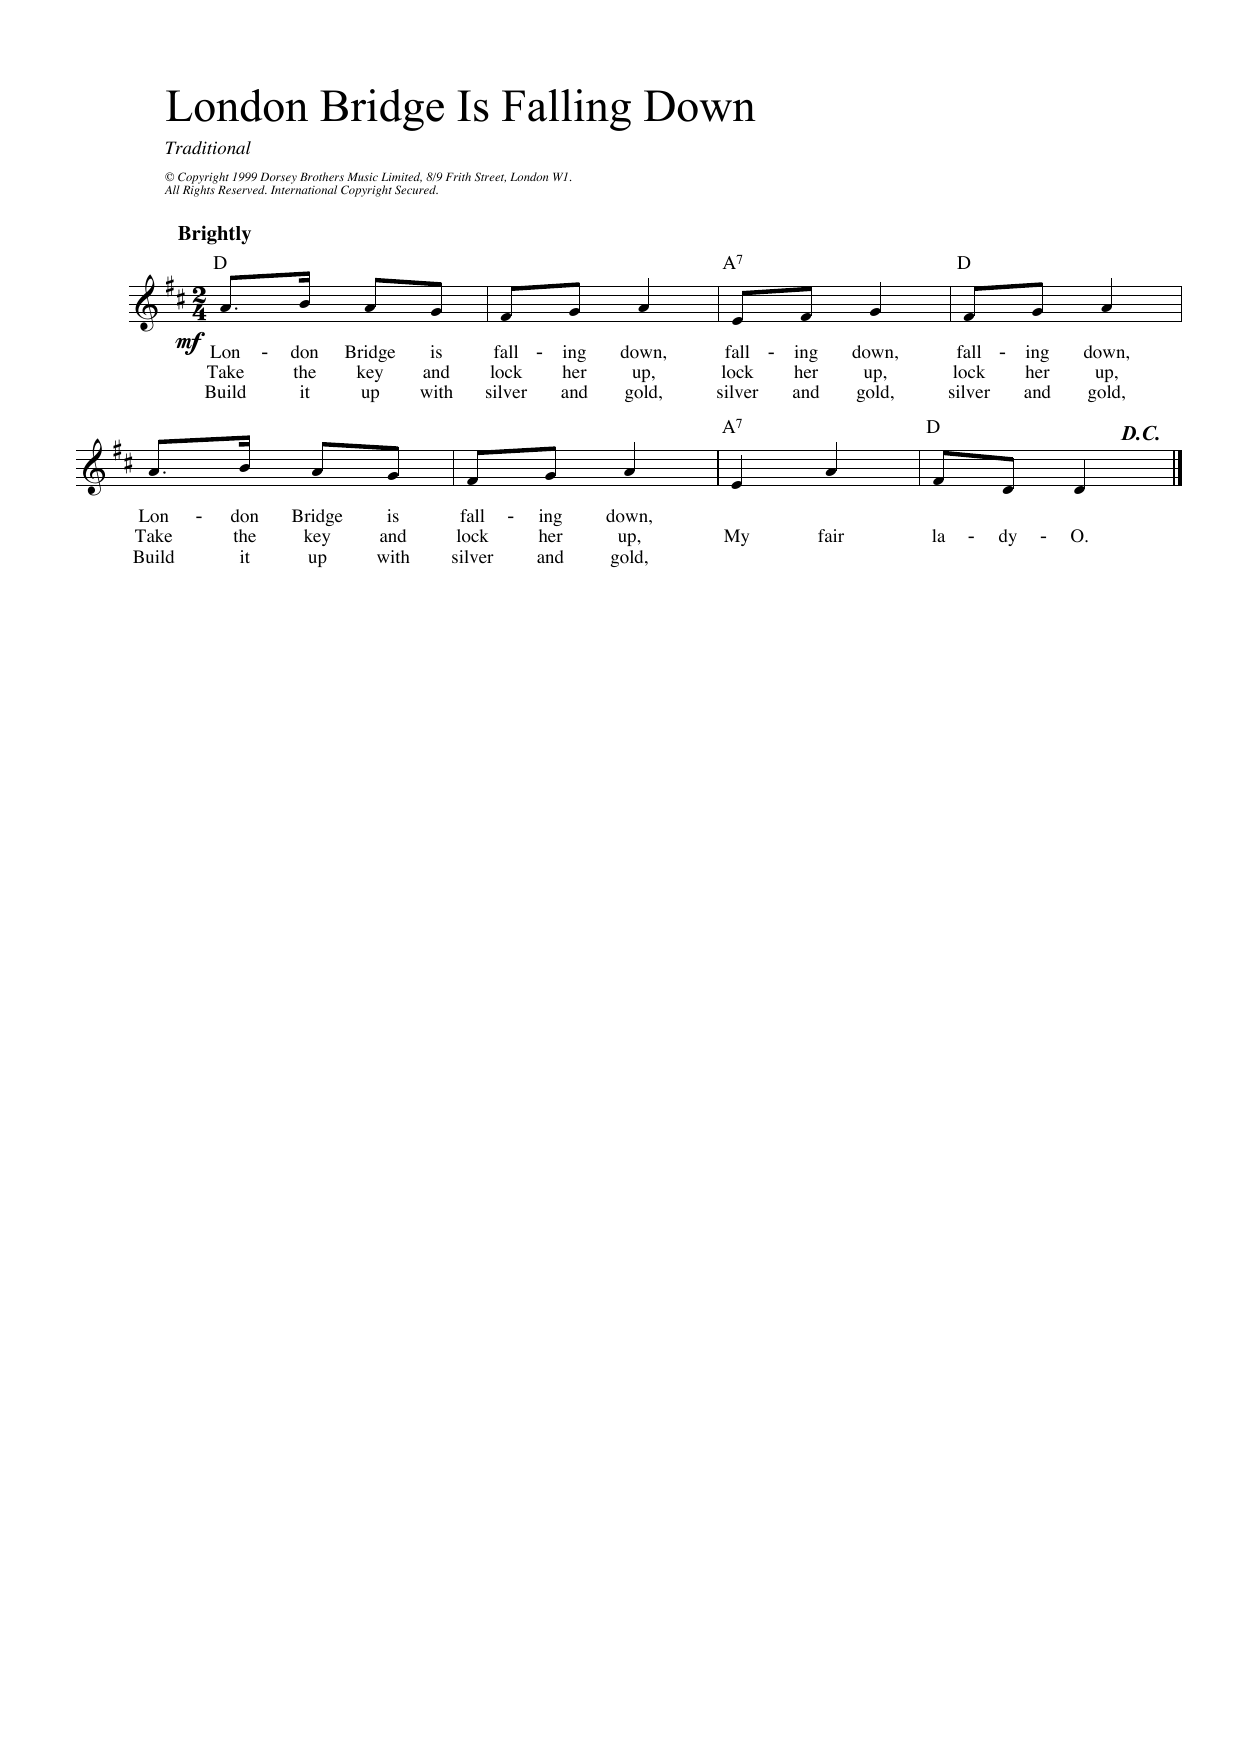 Traditional London Bridge sheet music notes printable PDF score